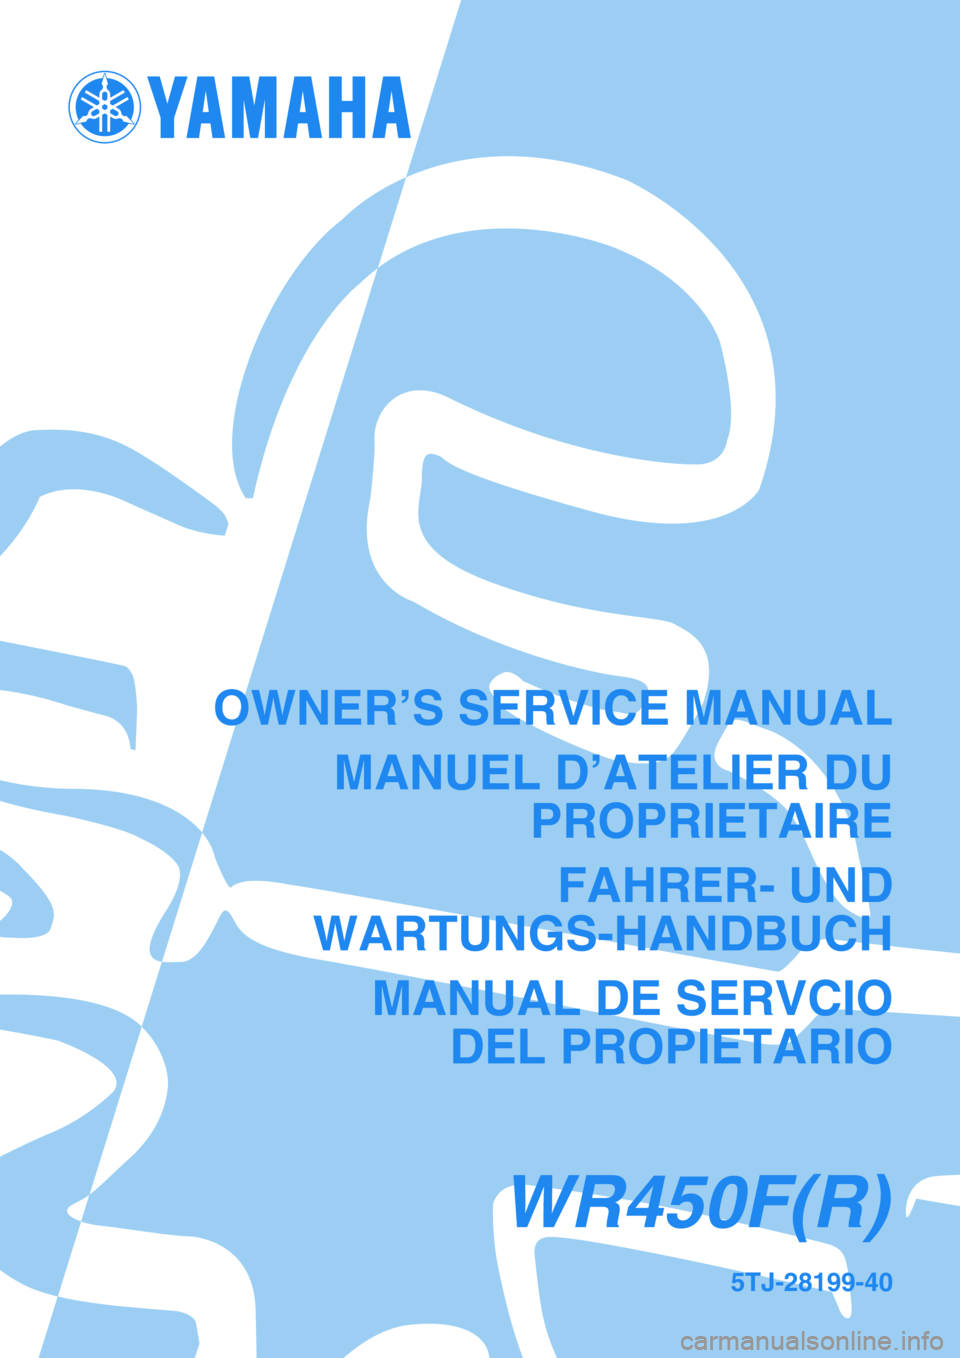 YAMAHA WR 450F 2003  Owners Manual 5TJ-28199-40
WR450F(R)
OWNER’S SERVICE MANUAL
MANUEL D’ATELIER DU
PROPRIETAIRE
FAHRER- UND
WARTUNGS-HANDBUCH
MANUAL DE SERVCIO
DEL PROPIETARIO 